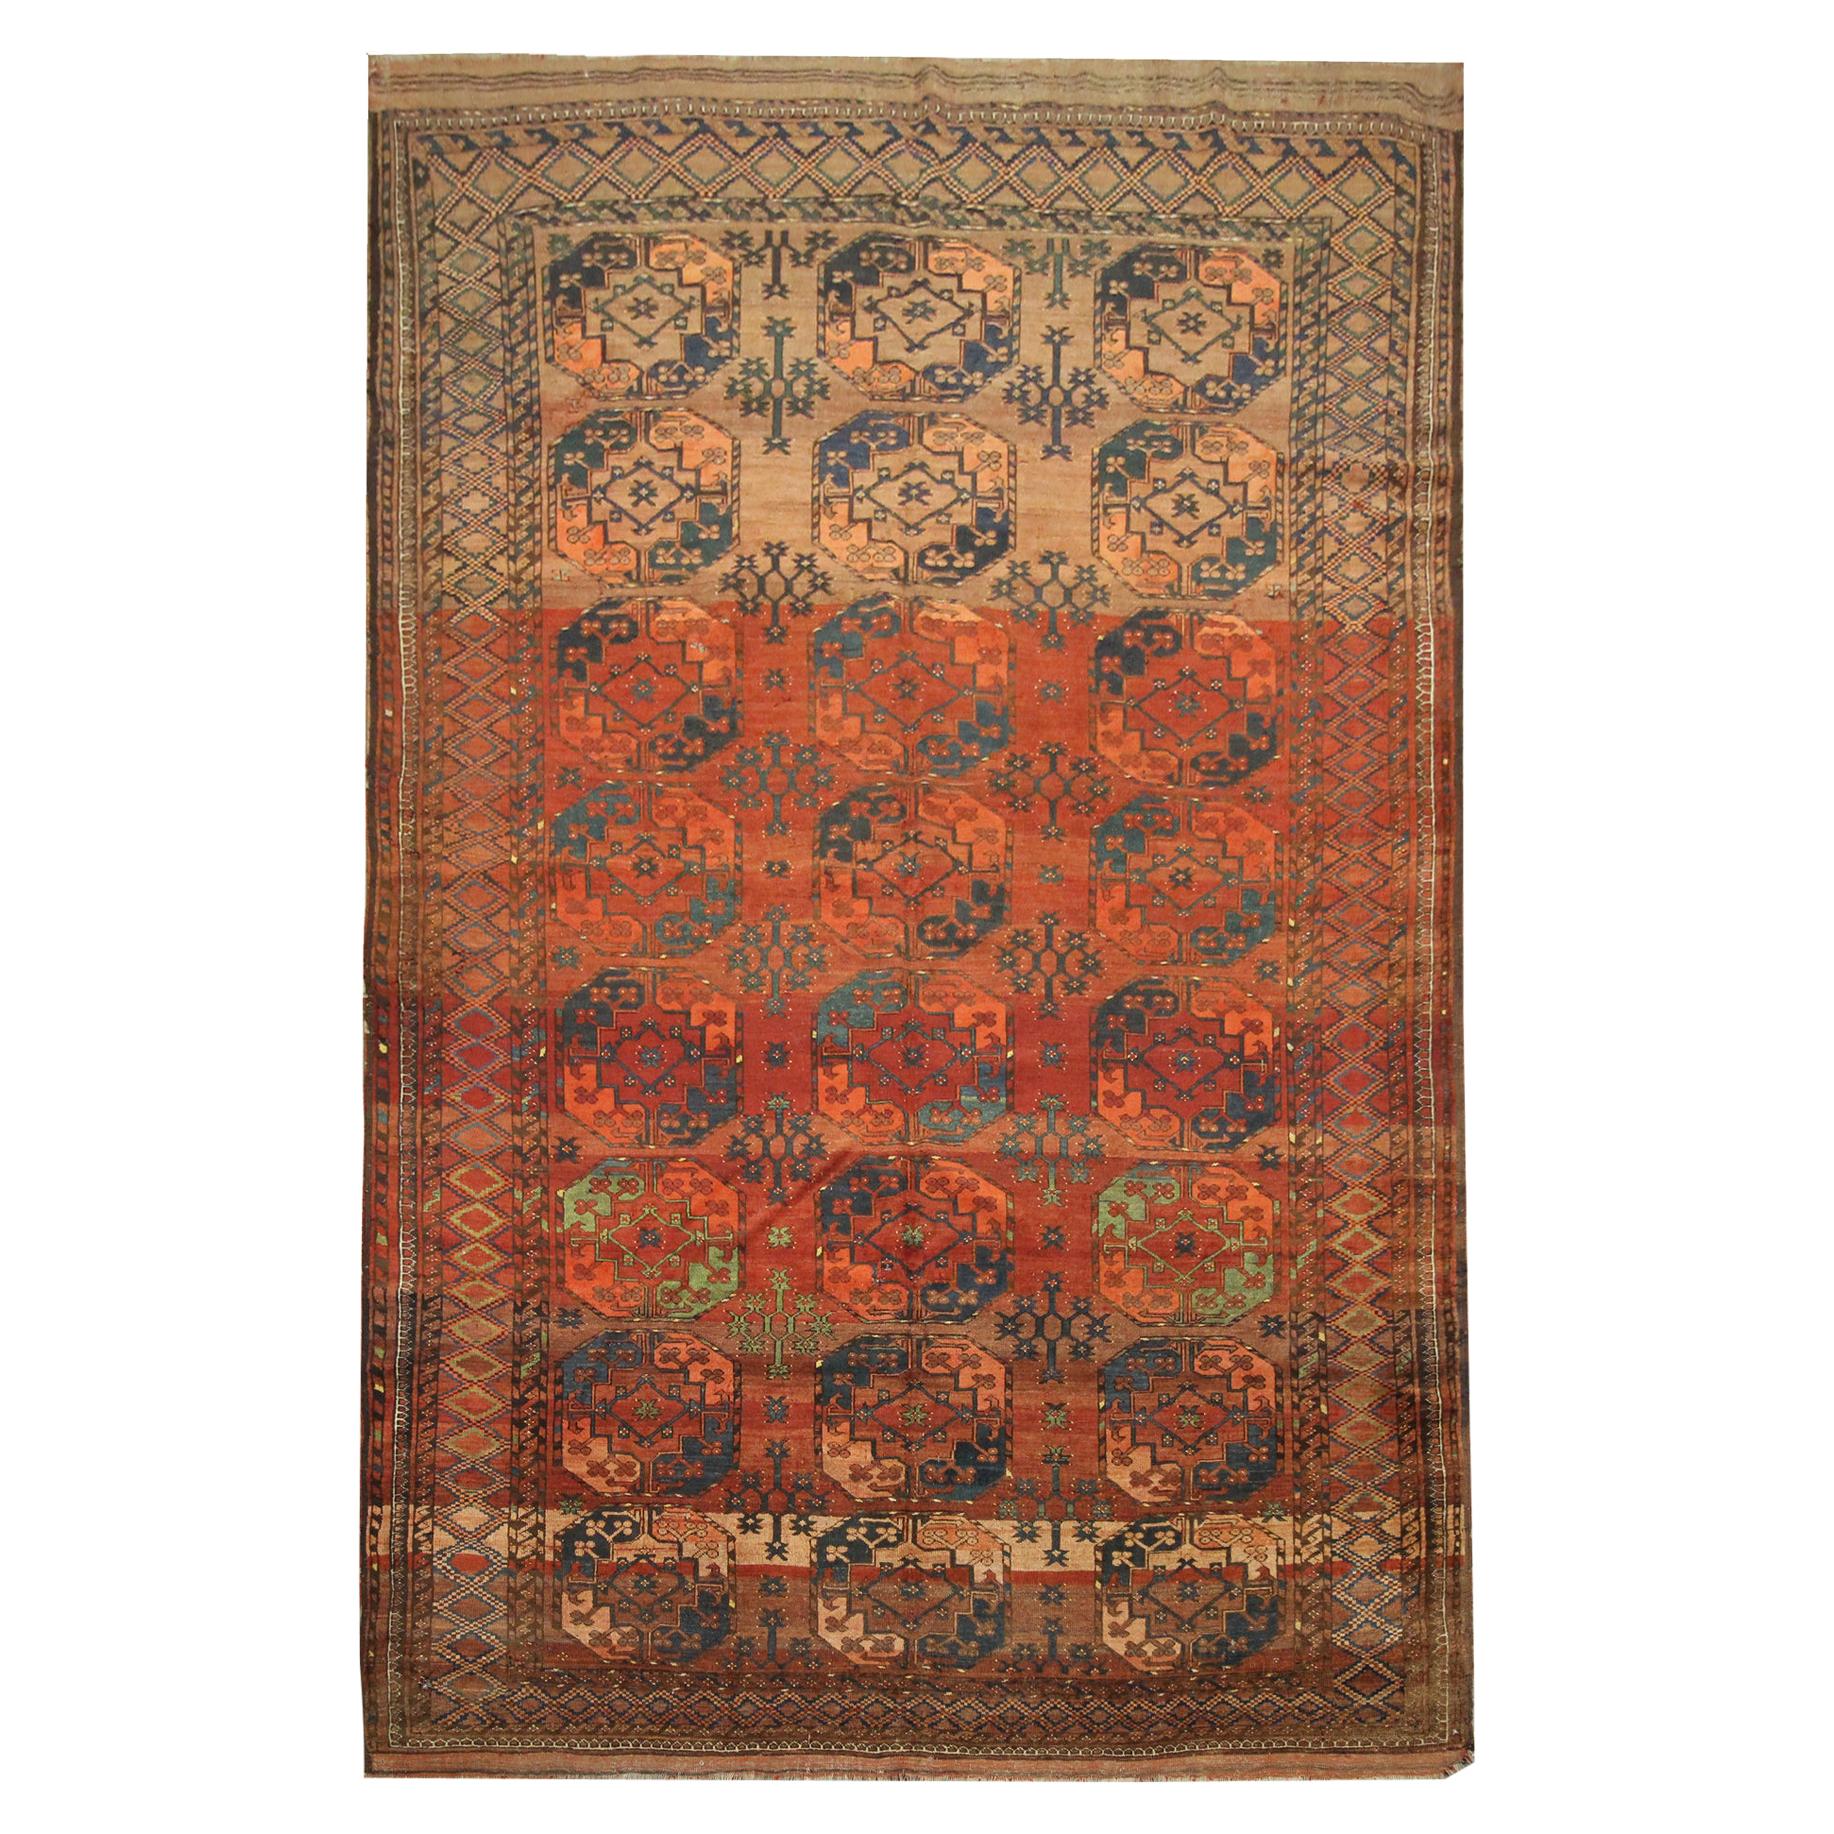 Antique Rugs Turkmen Original Ersari Handwoven Wool Area Rugs